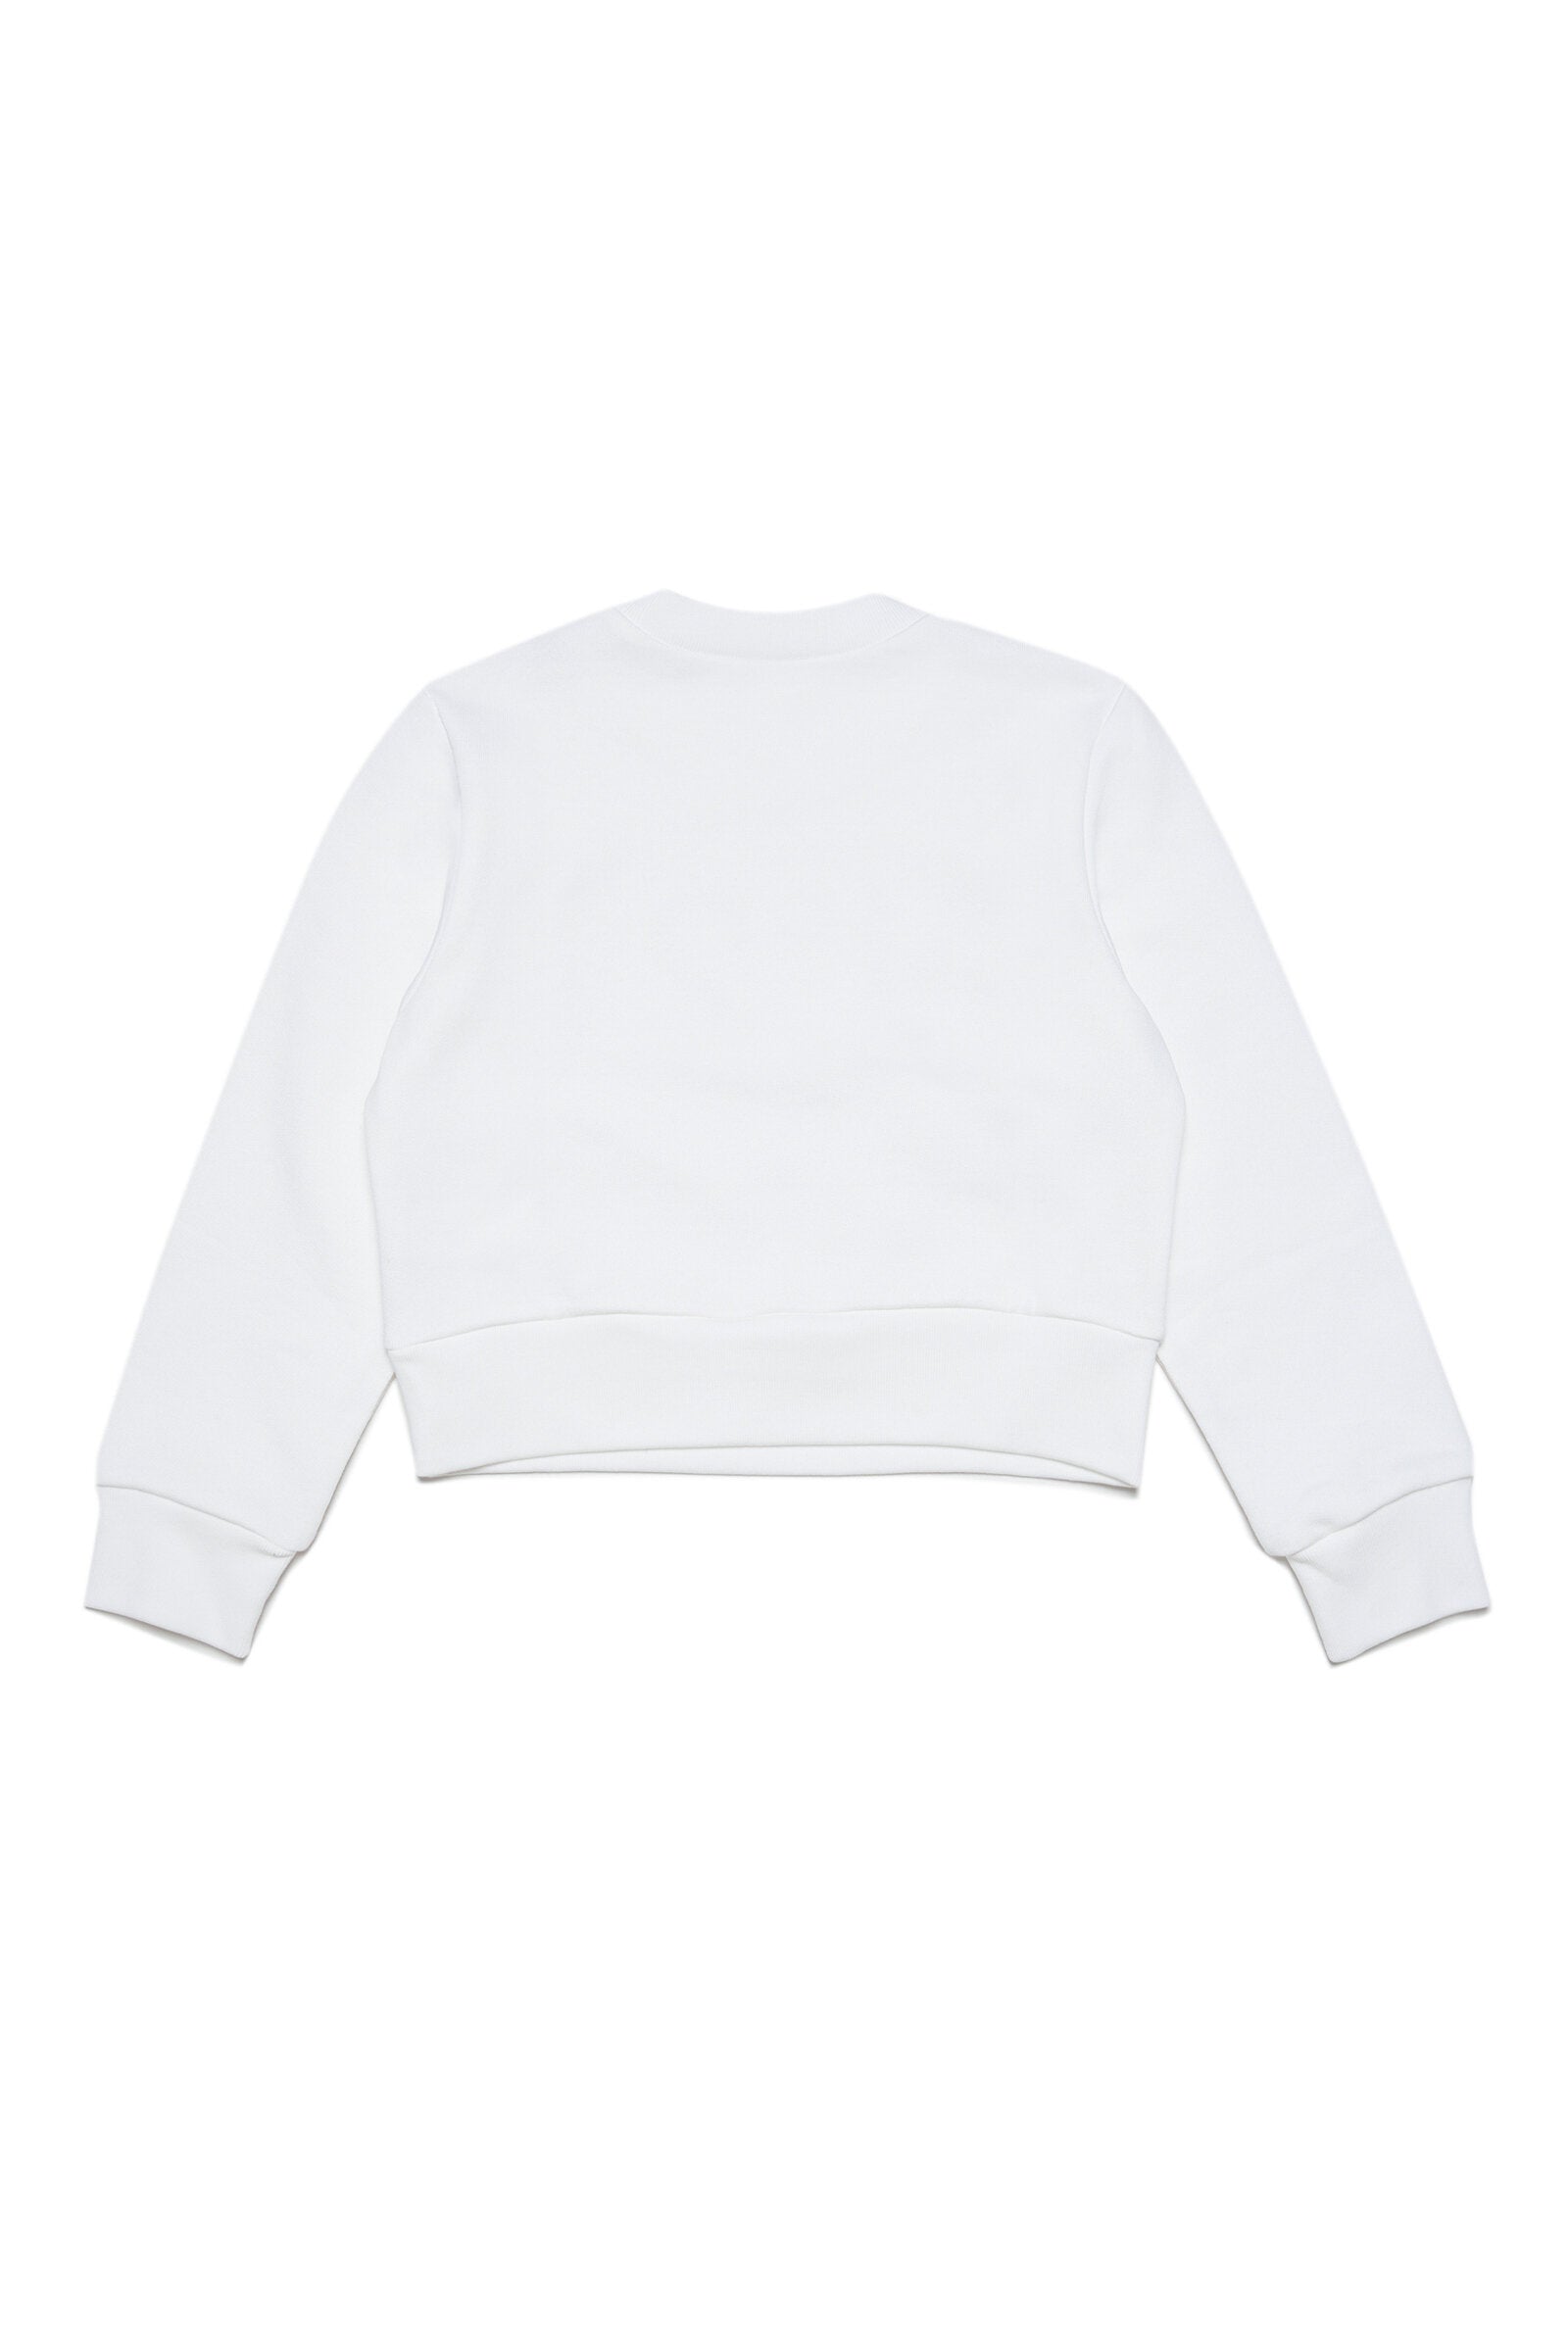 White cotton crew-neck sweatshirt with logo